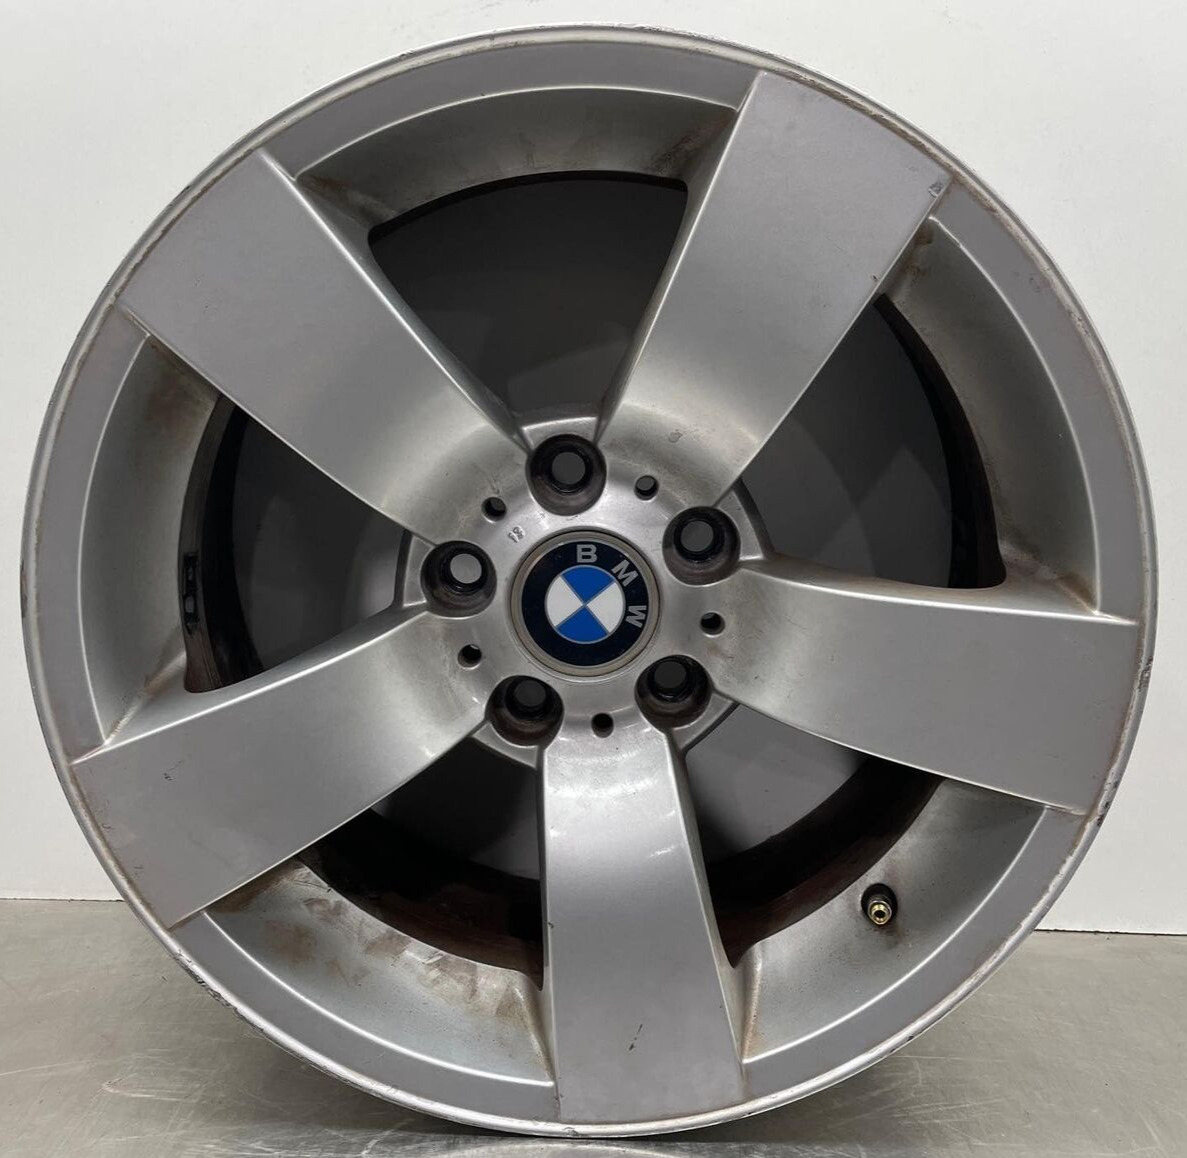 2004 BMW 525i OEM Factory Alloy Wheel Rim 5 Spoke 17